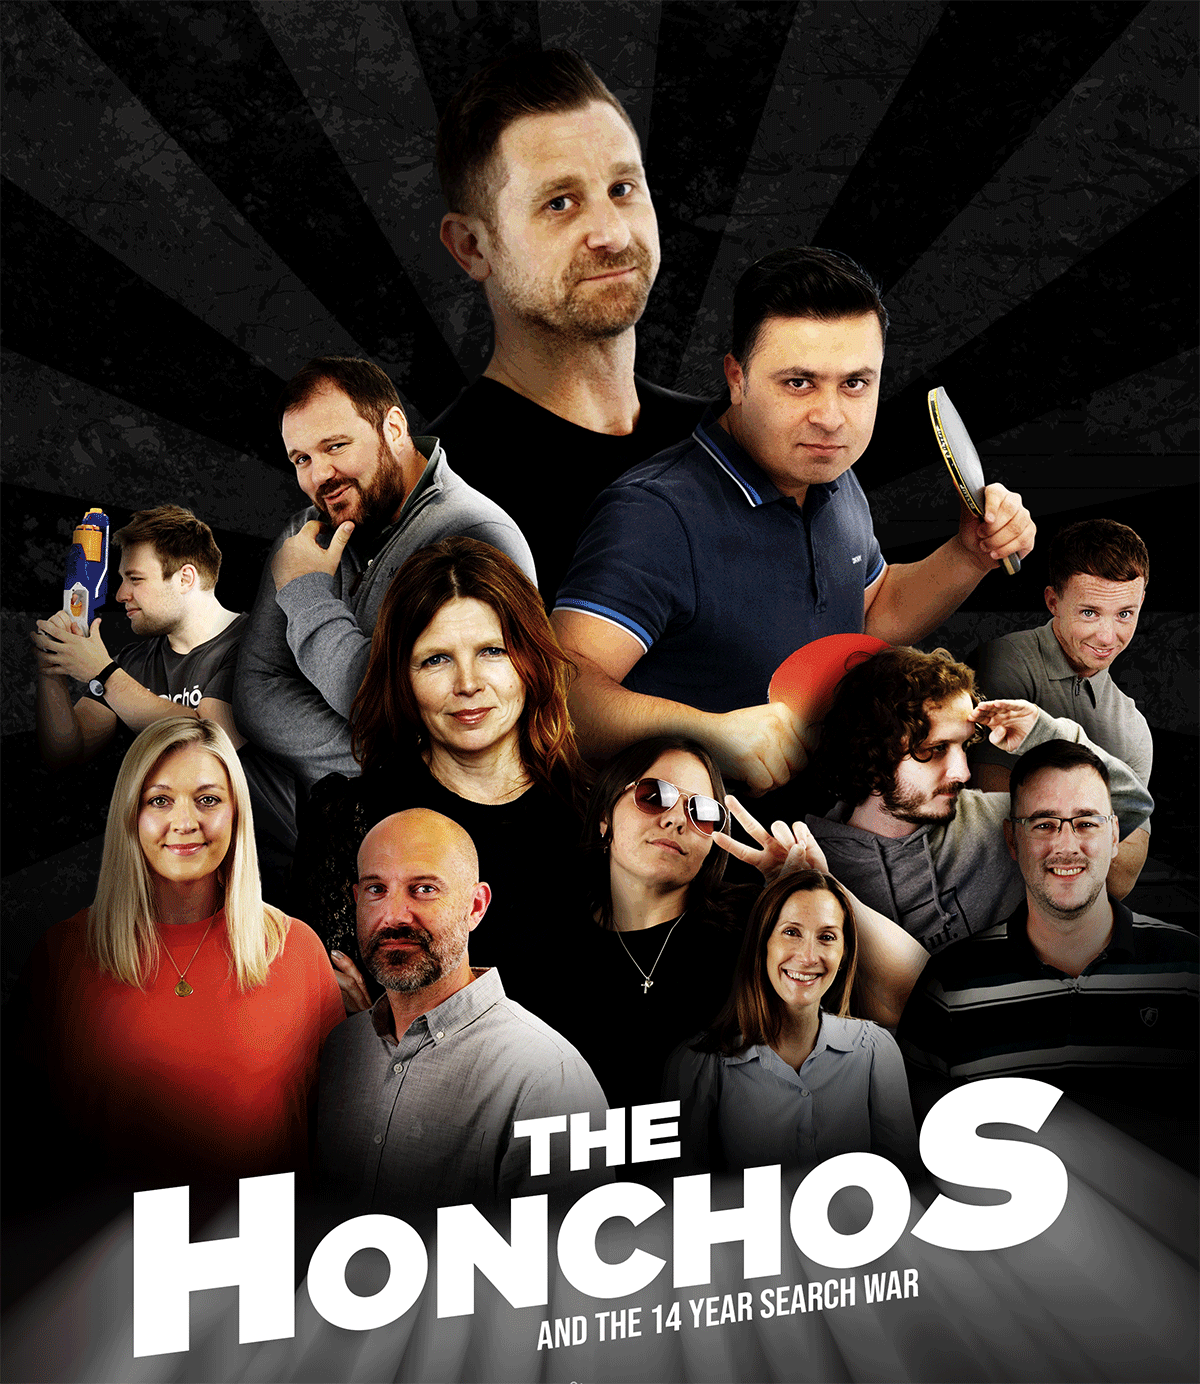 The Honchos